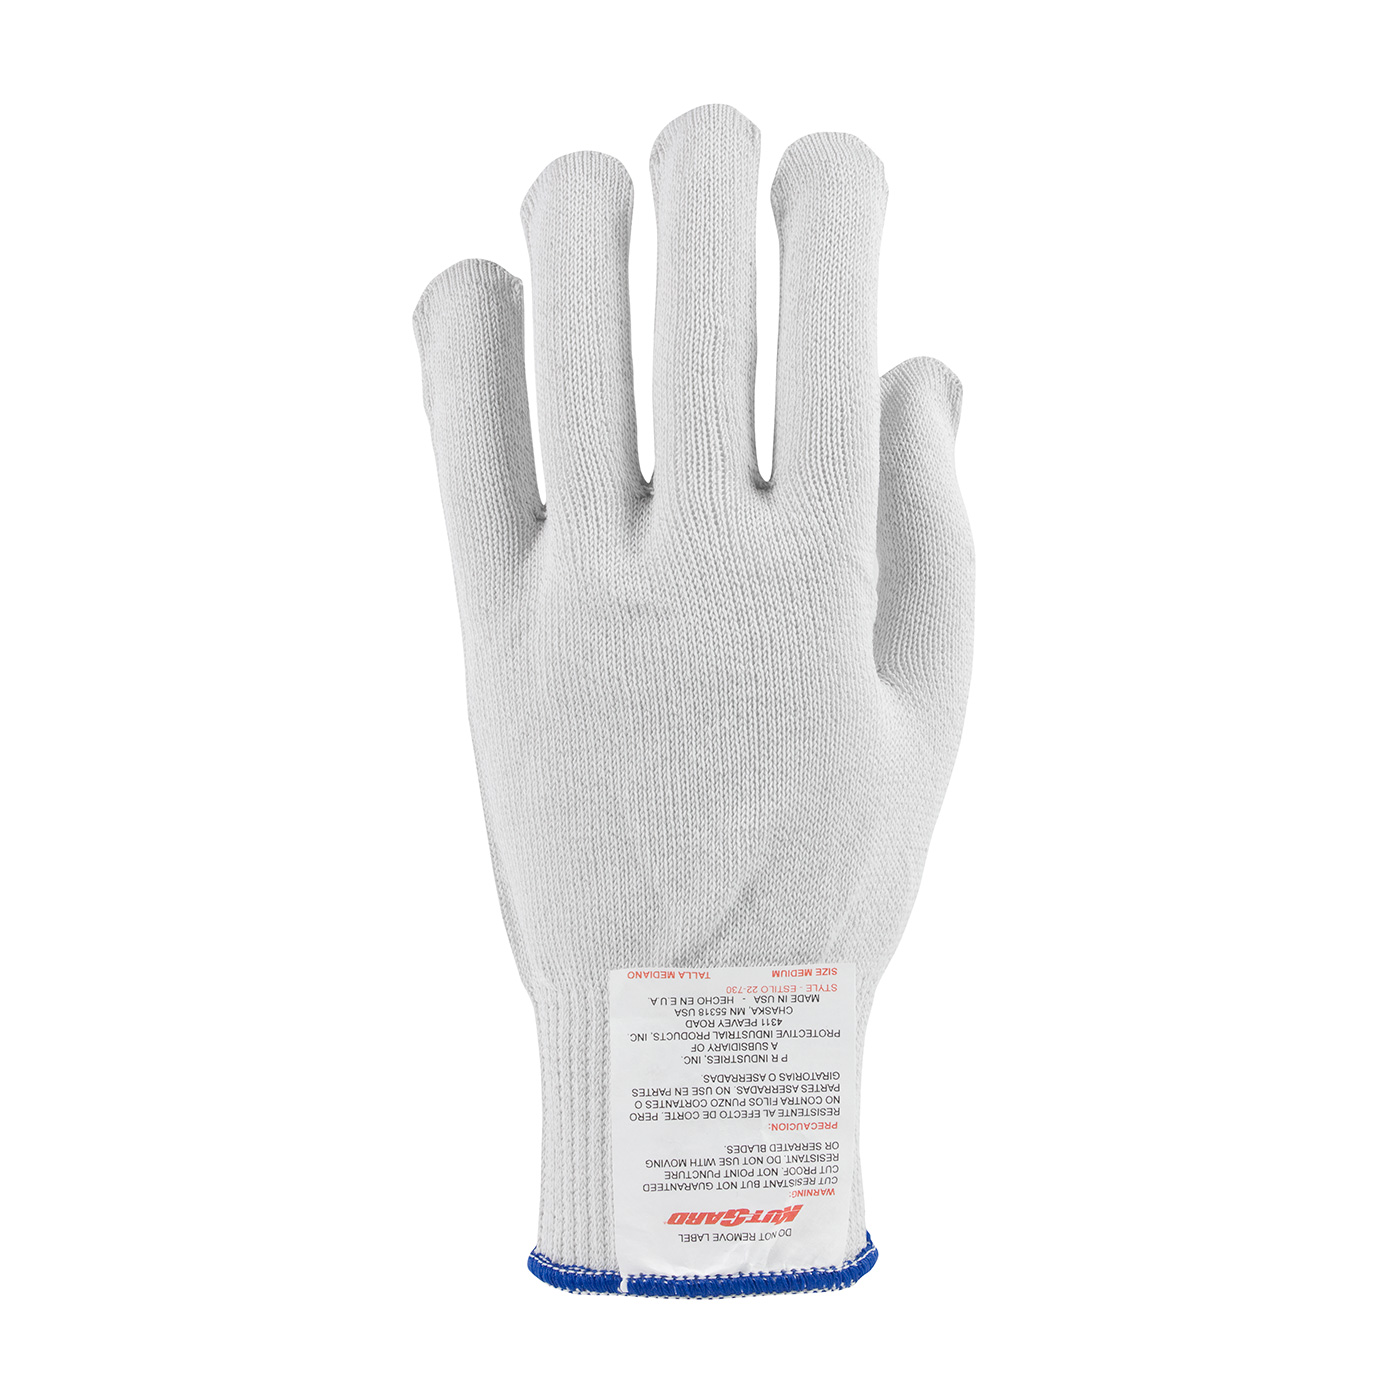 PIP Kut Gard® White Seamless Knit PolyKor Cut Resistant Gloves - Light Weight